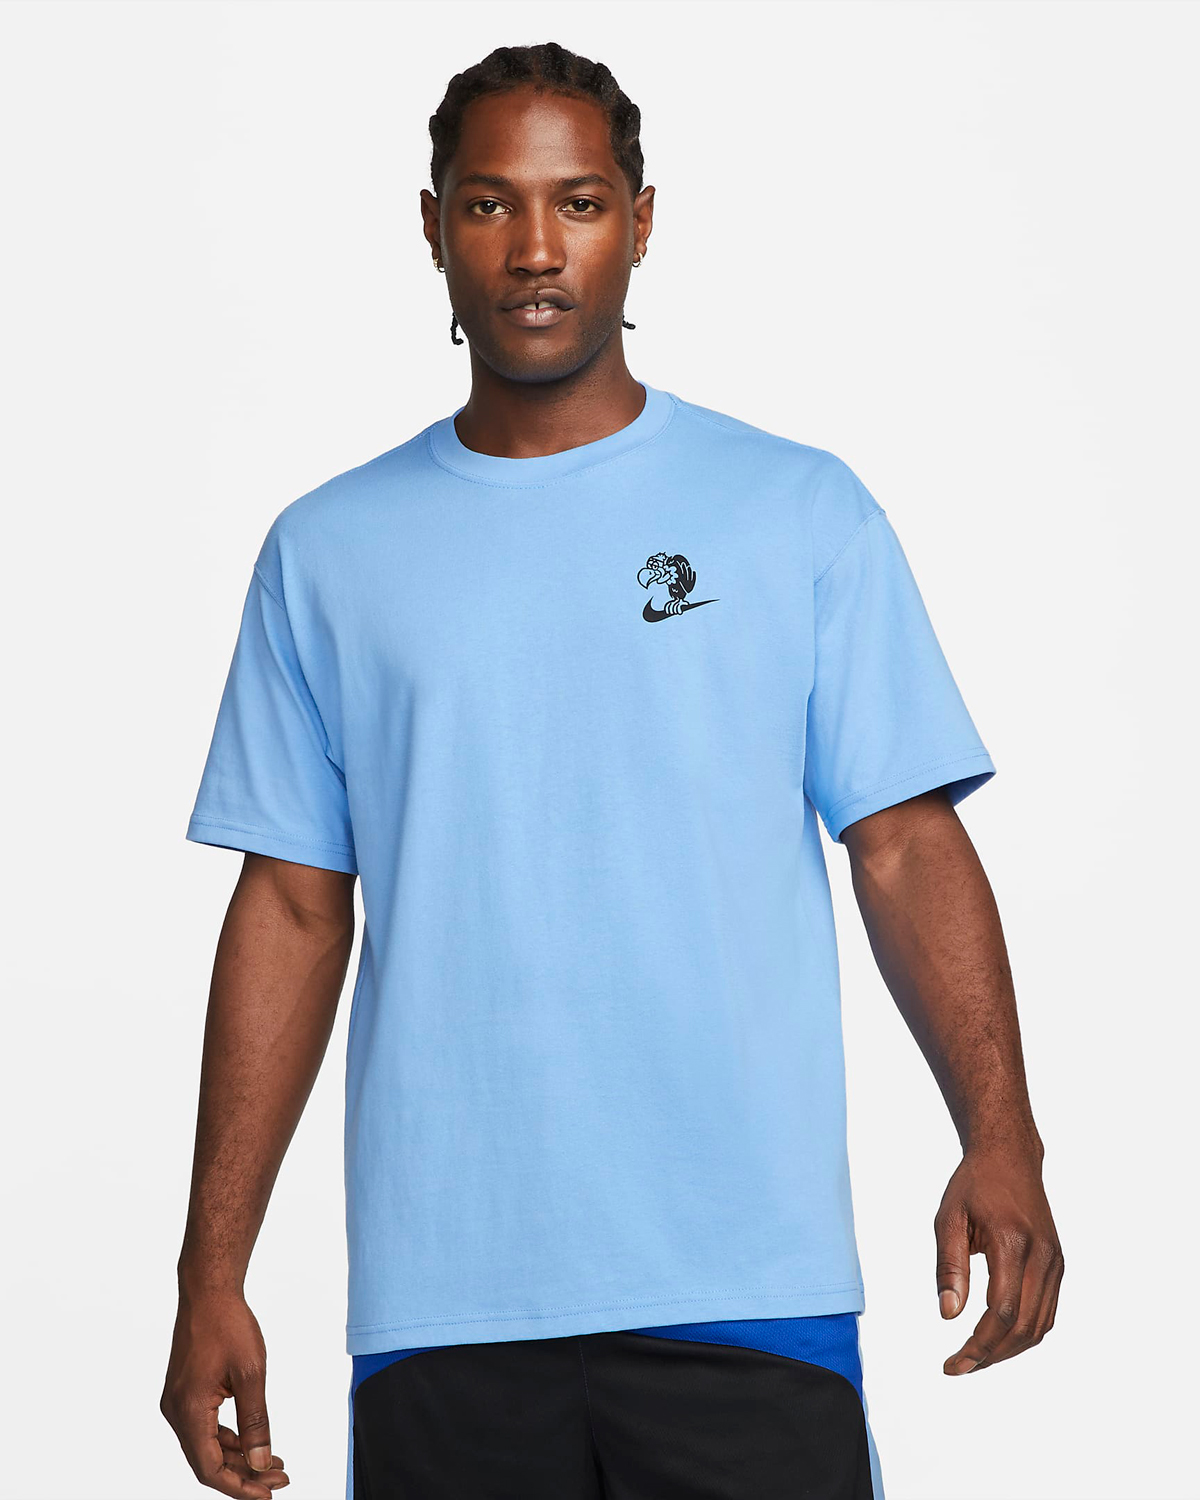 Nike-Basketball-T-Shirt-University-Blue-1